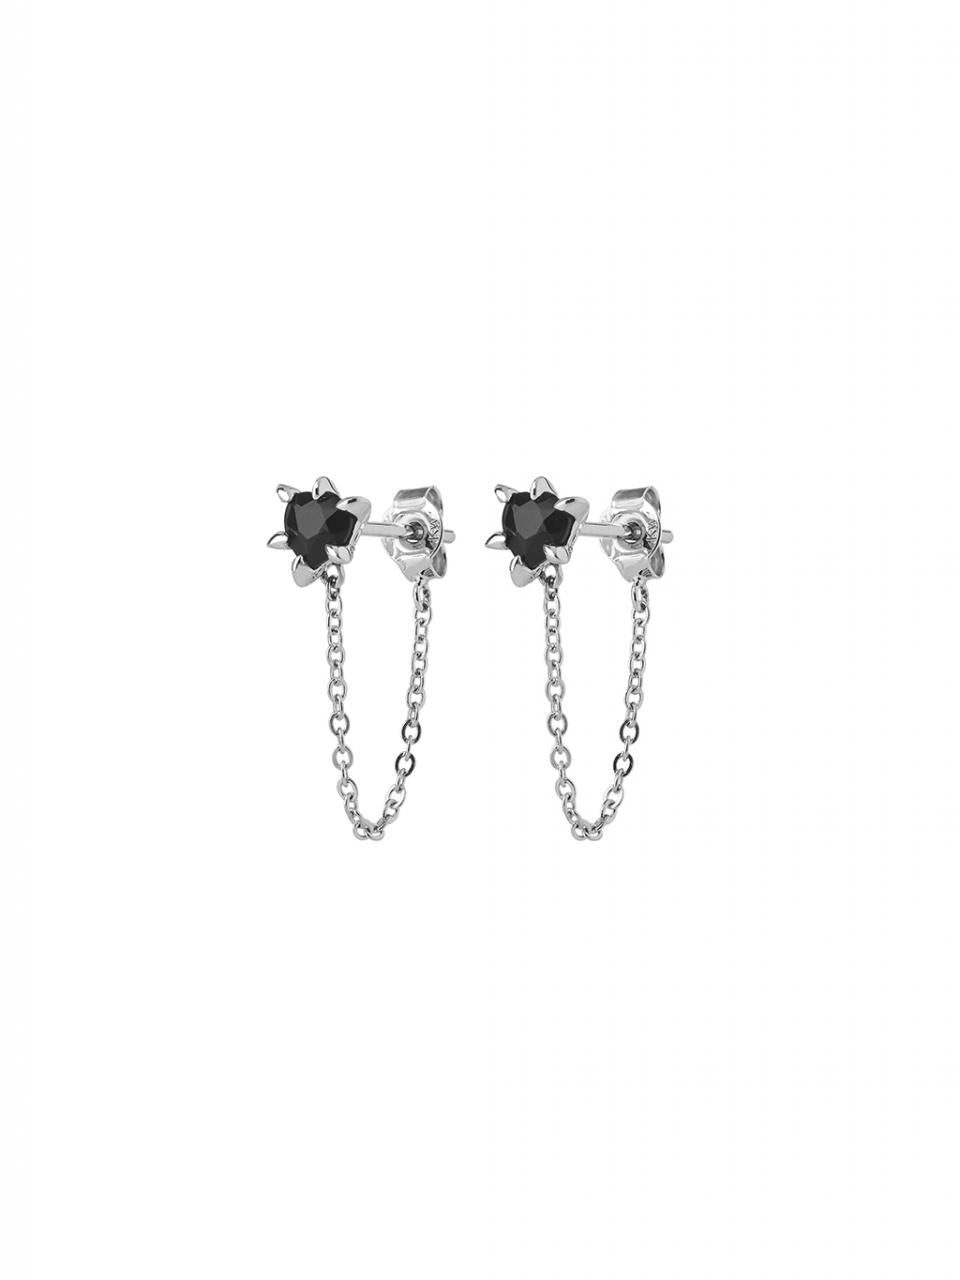 Karen Walker Cupid's Heart and Chain Black Onyx Stud Earrings